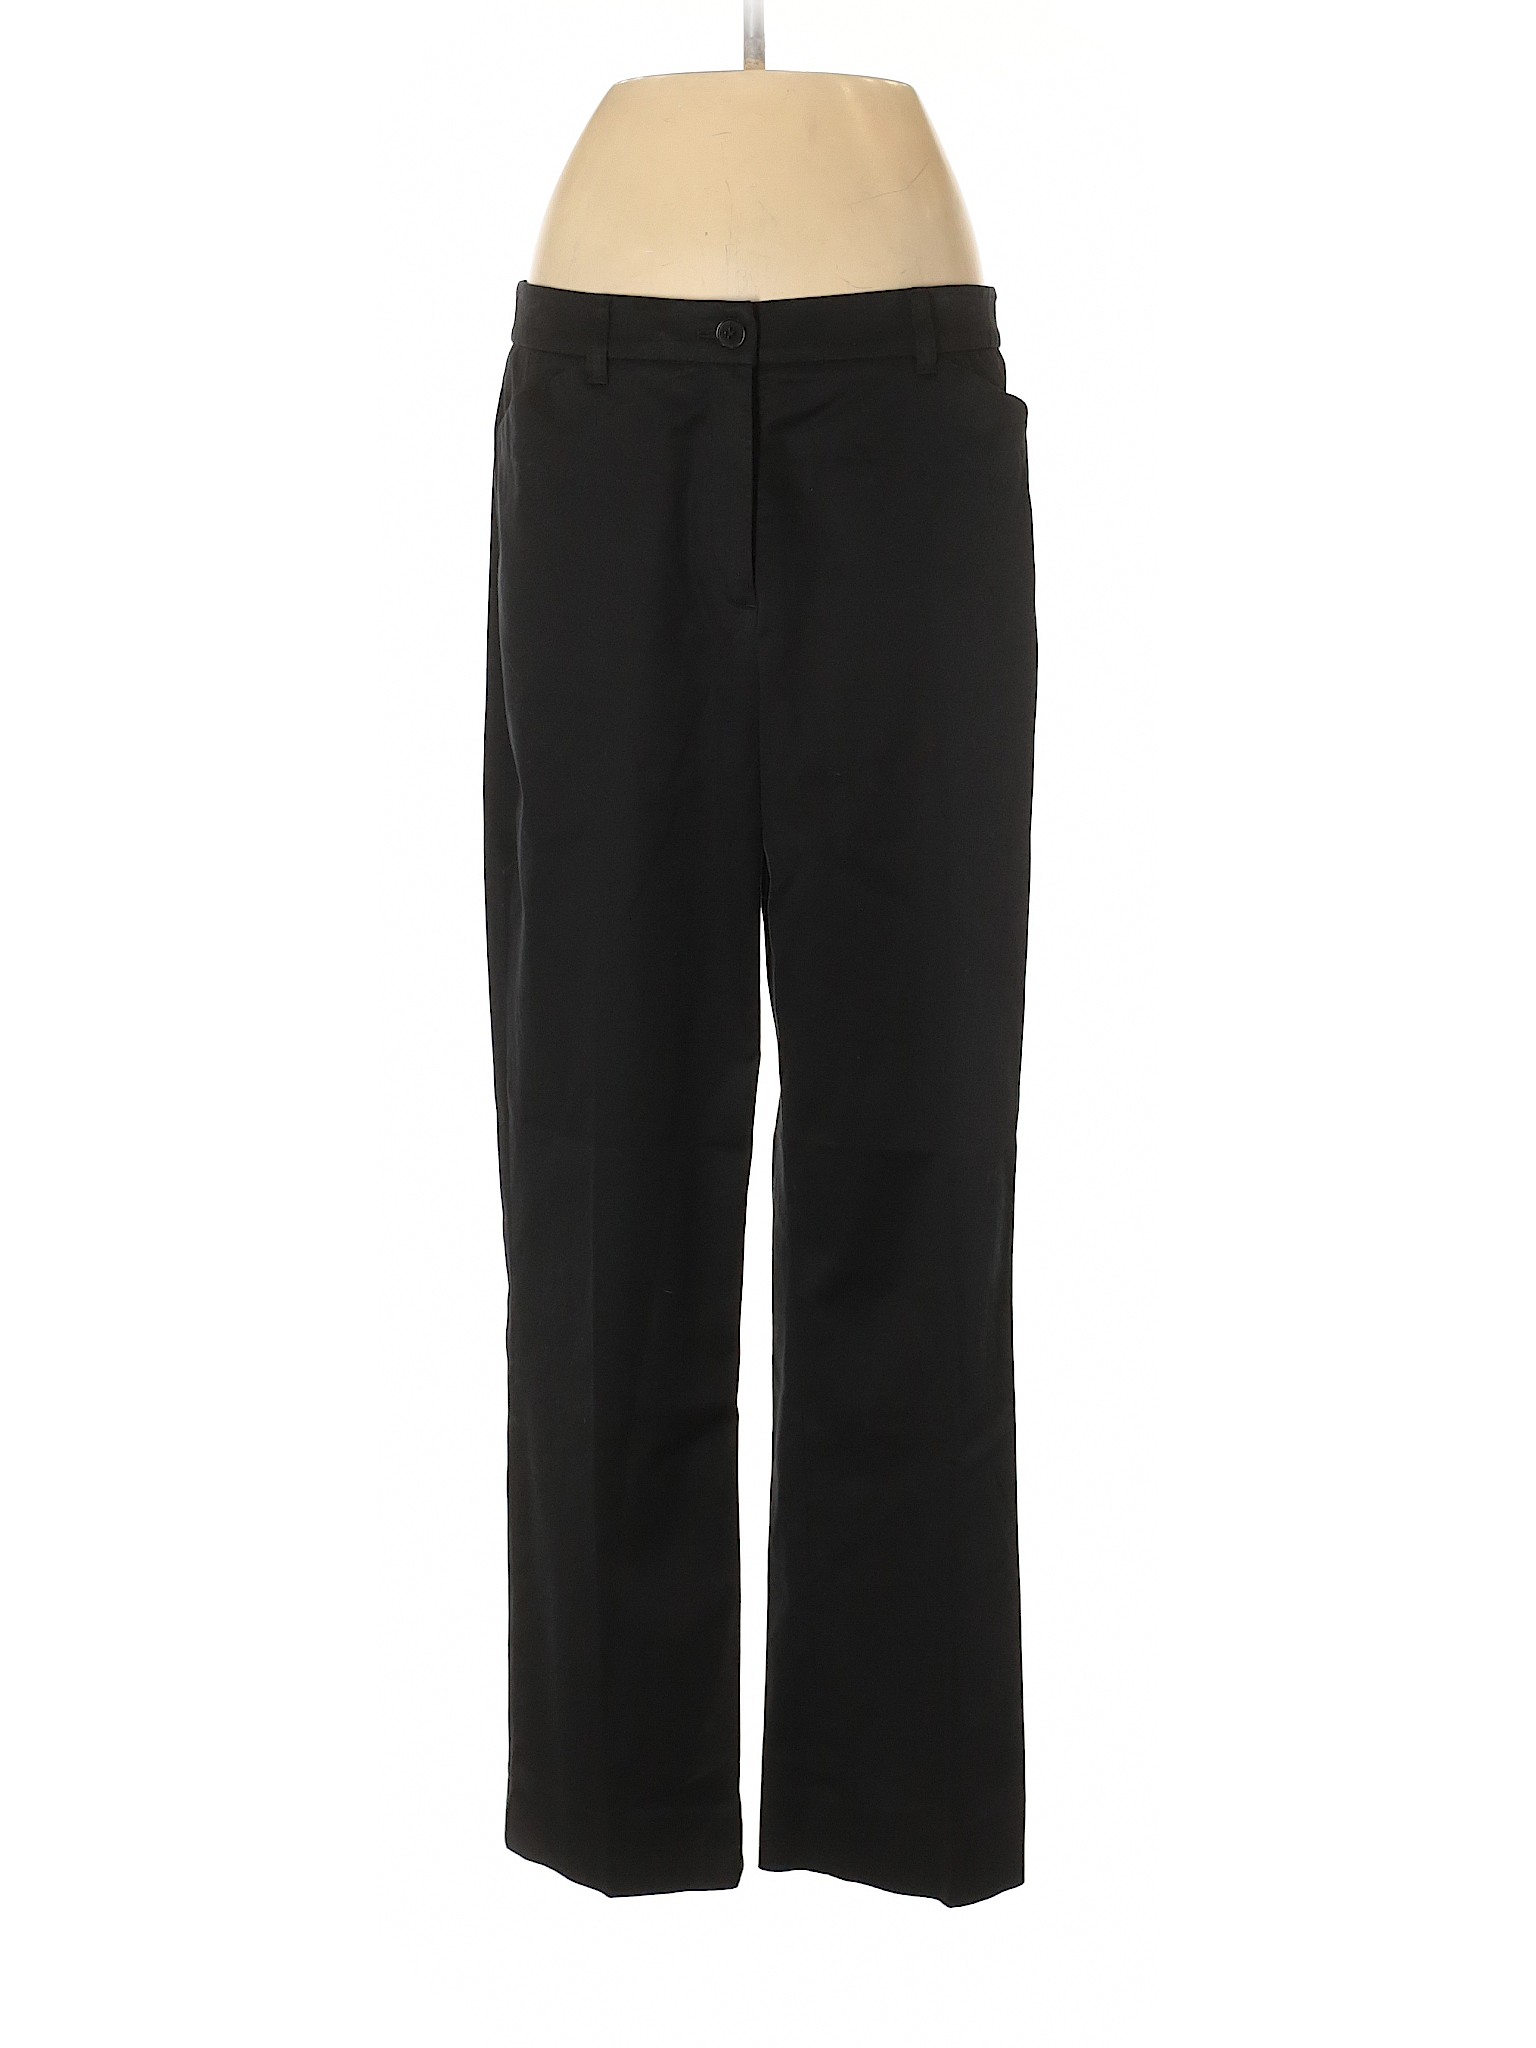 Jones New York Women Black Dress Pants 4 | eBay